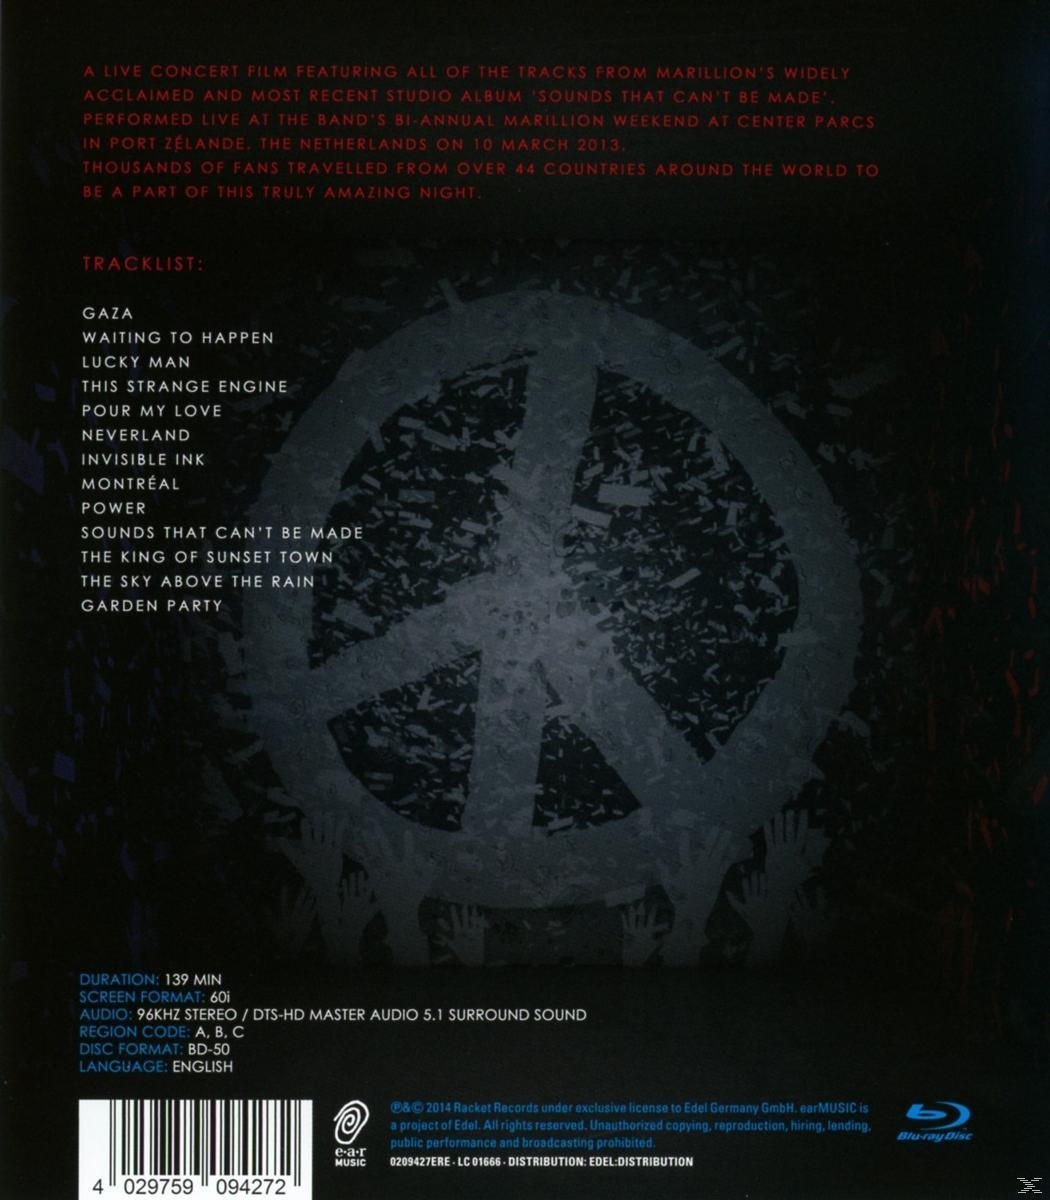 Marillion - The Rain Sunday Above A - (Blu-ray) Night